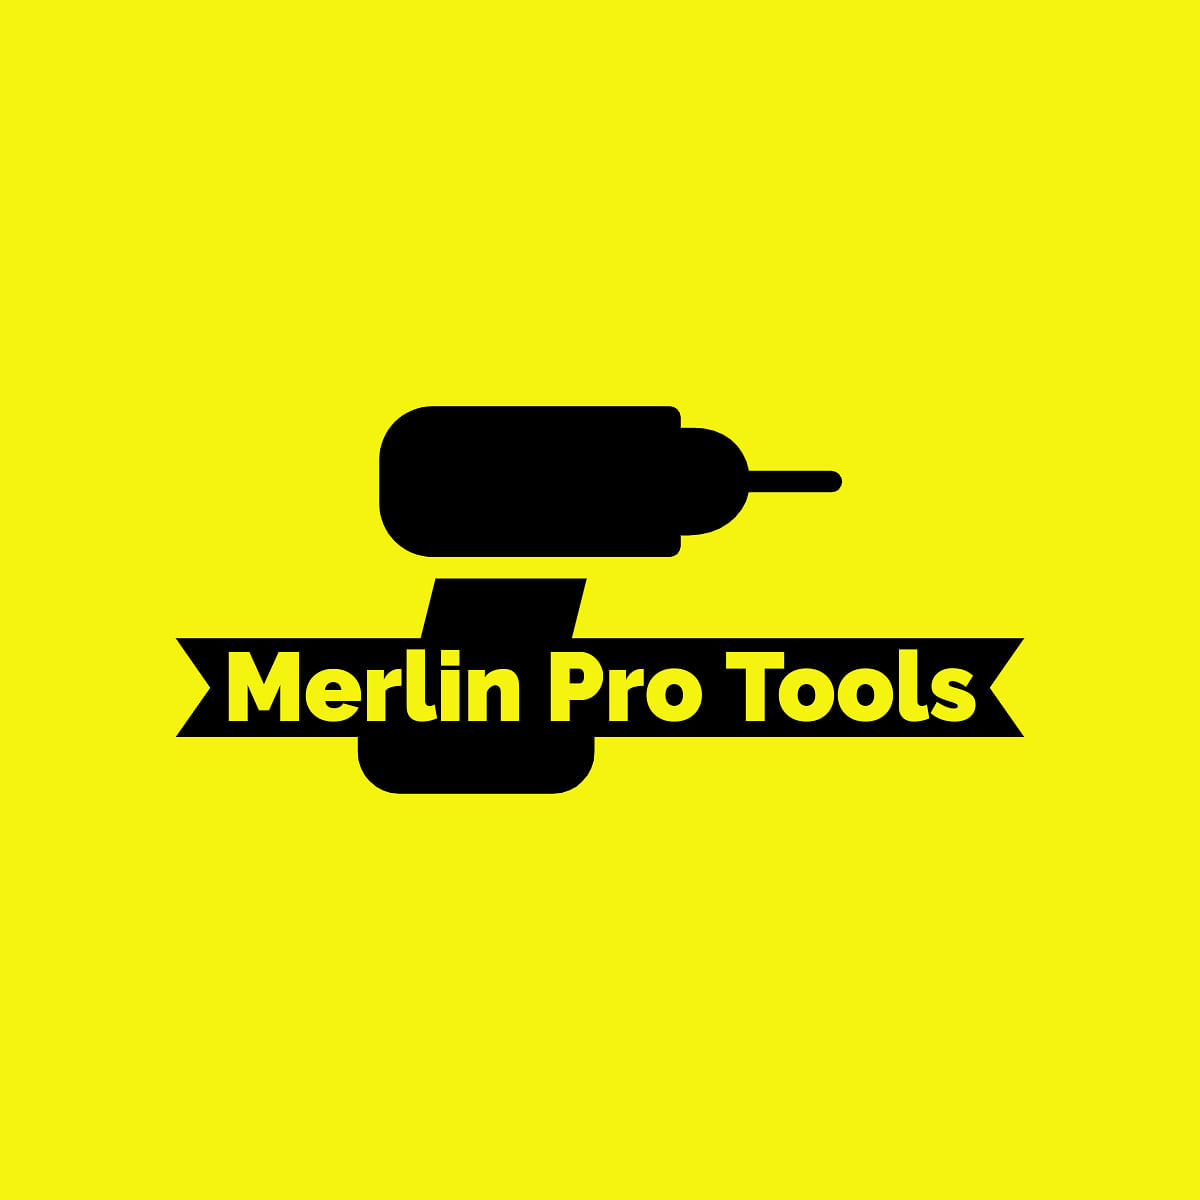 Merlin Pro Tools